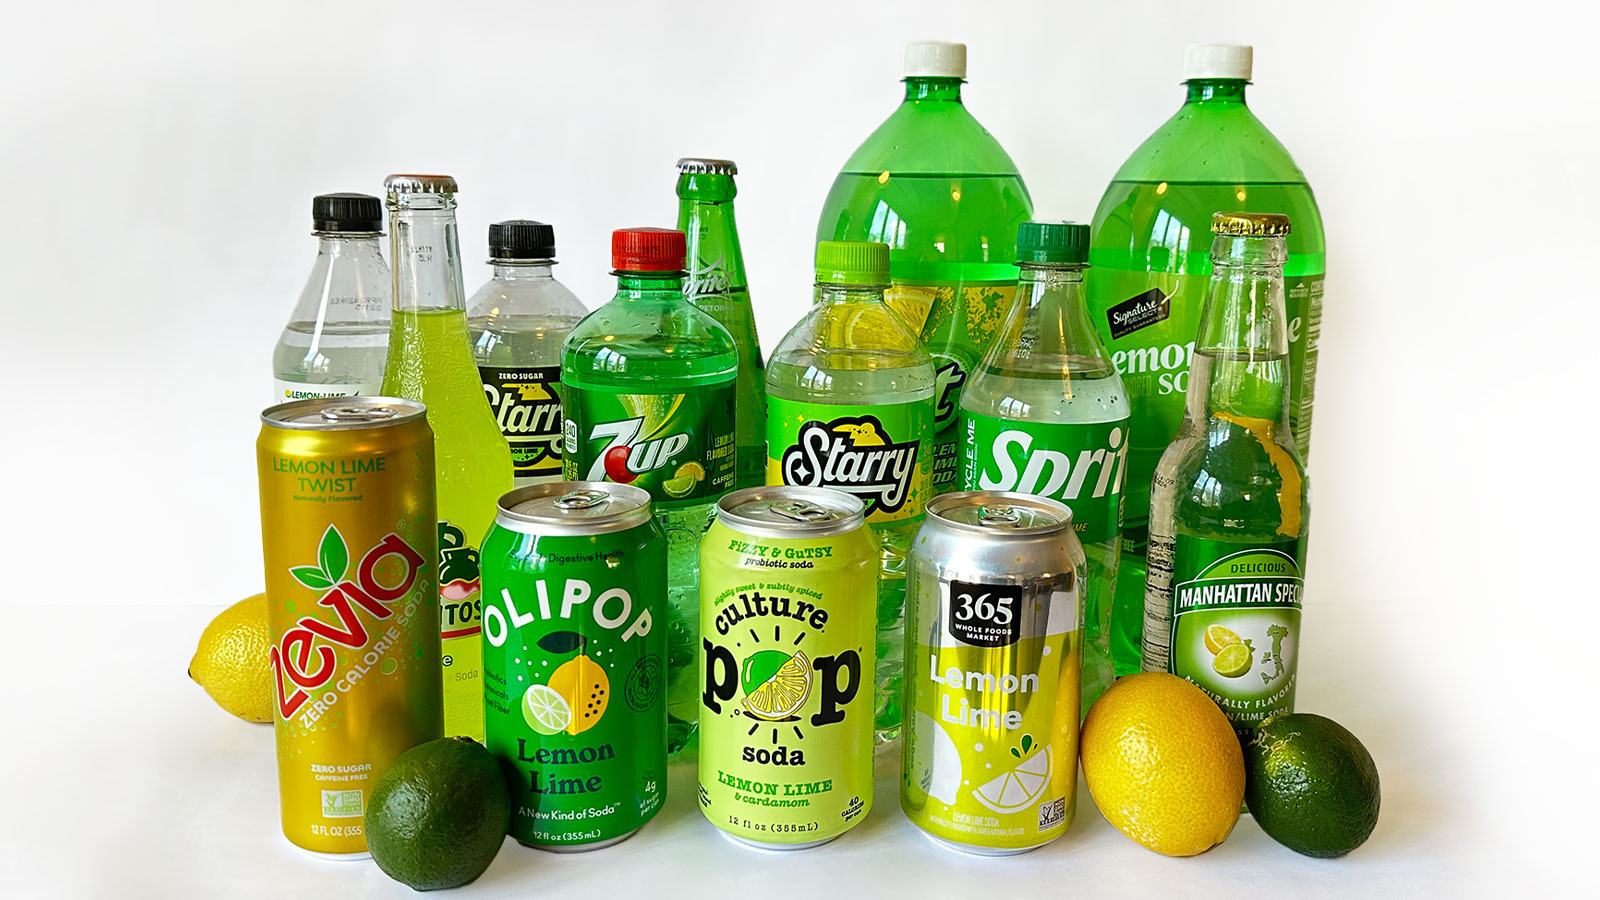 https://www.tastingtable.com/img/gallery/15-popular-lemon-lime-sodas-ranked-worst-to-best/l-intro-1679521689.jpg